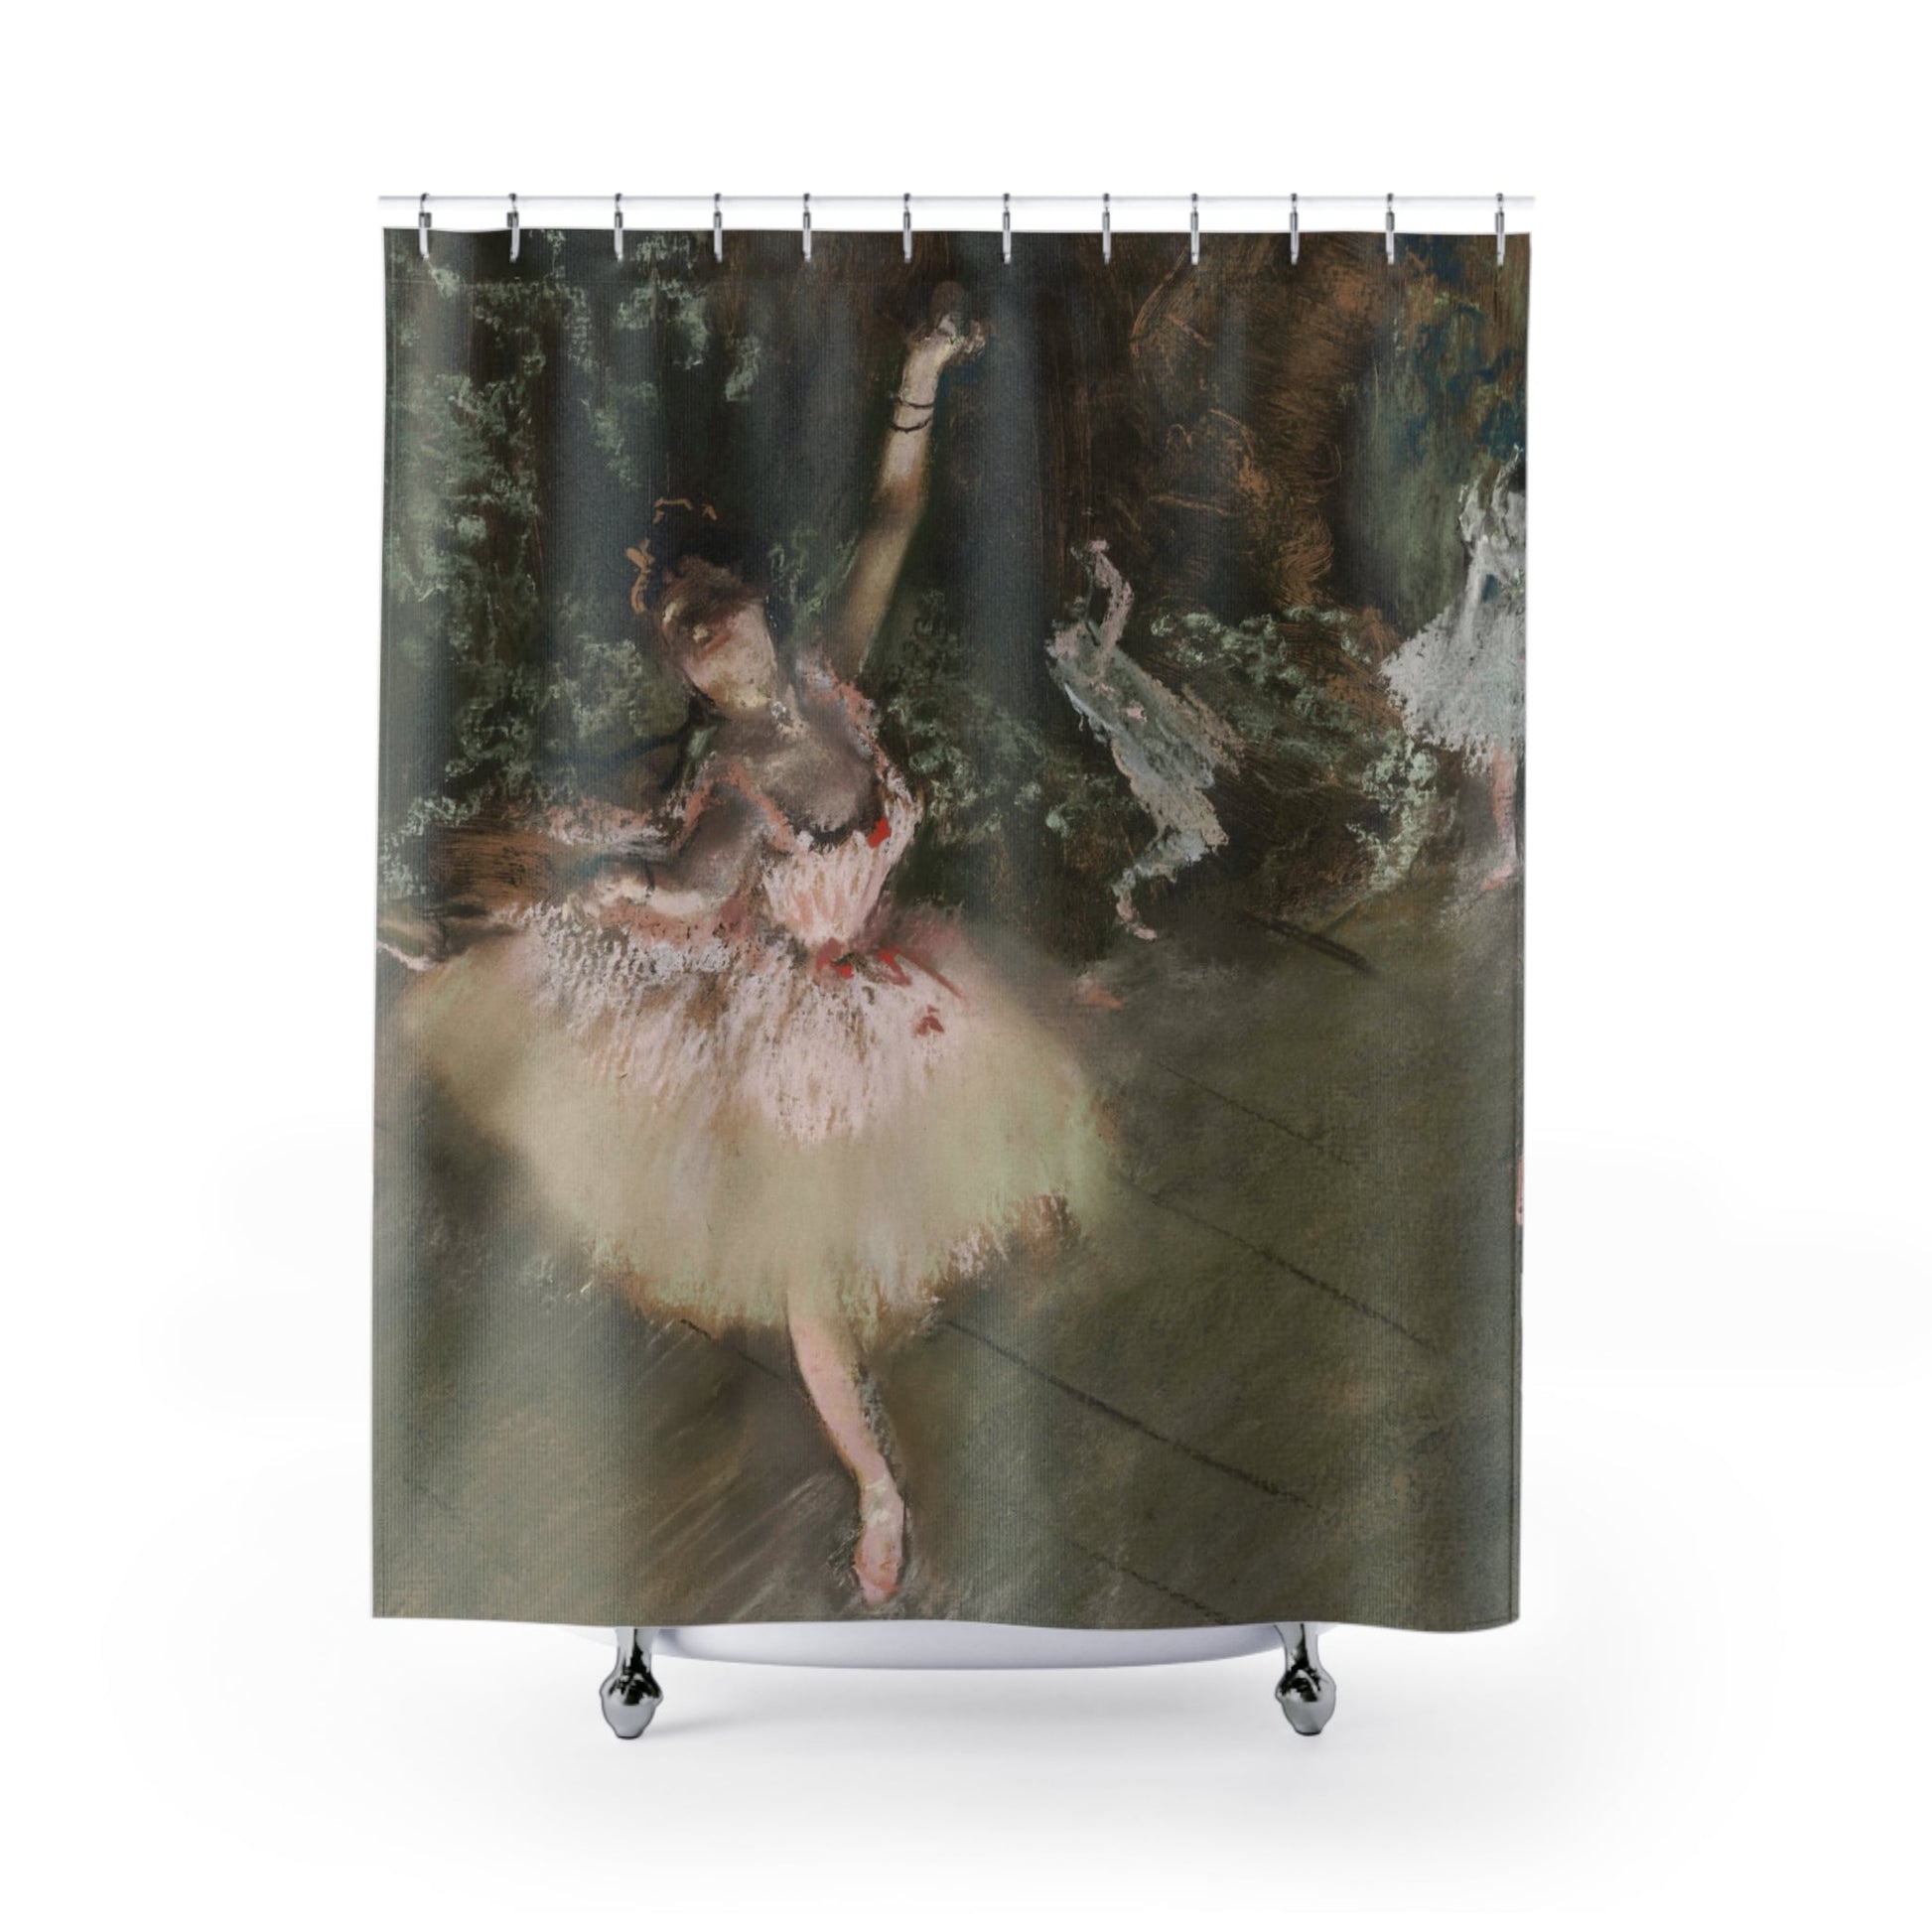 Ballerina Shower Curtain with Edgar Degas design, classic bathroom decor showcasing Degas's famous ballerina paintings.